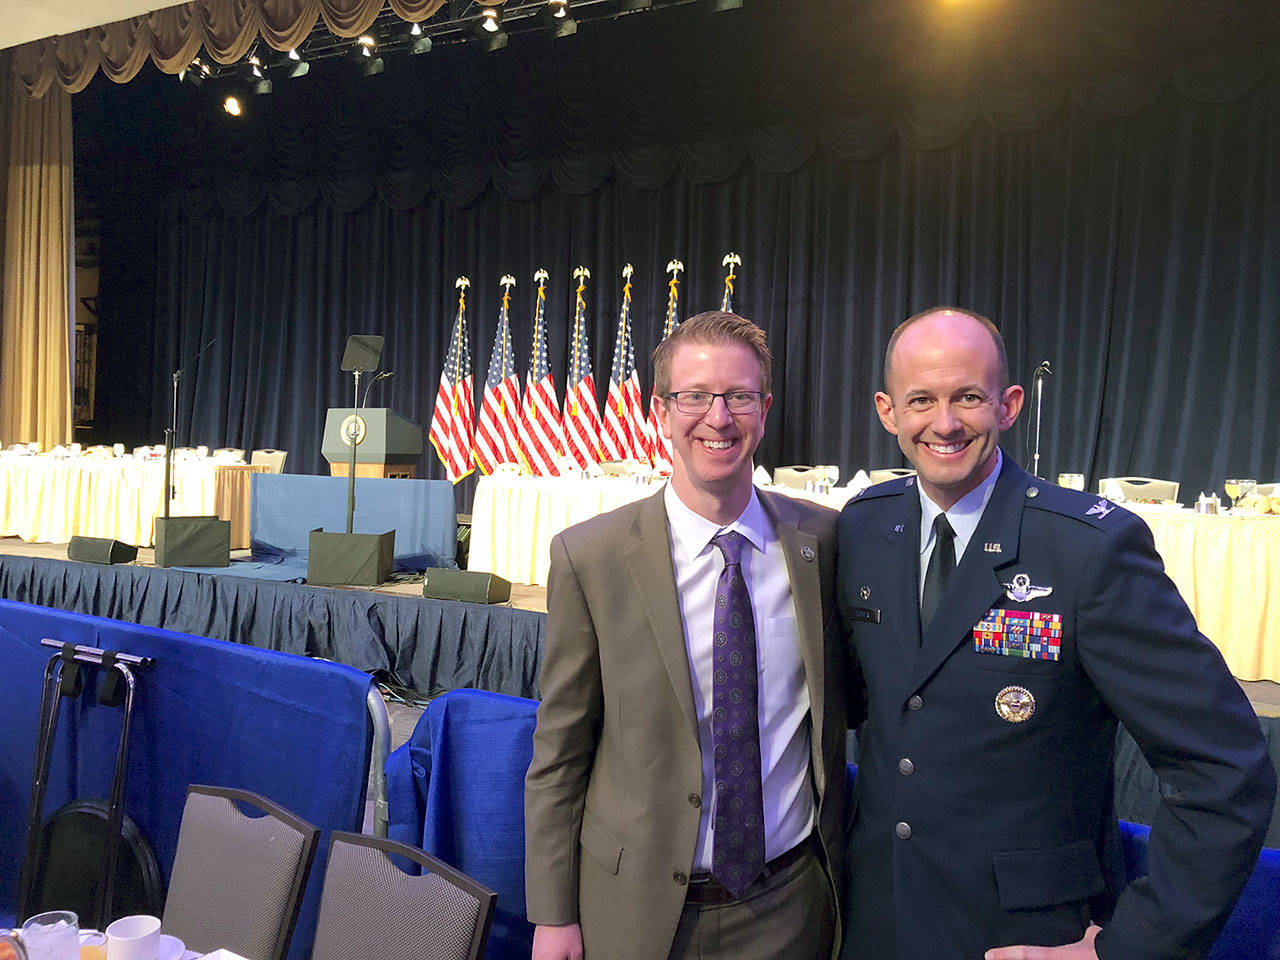 U.S. Rep. Derek Kilmer and Air Force Col. John Teichert at the National Prayer Breakfast on Thursday in Washington, D.C.